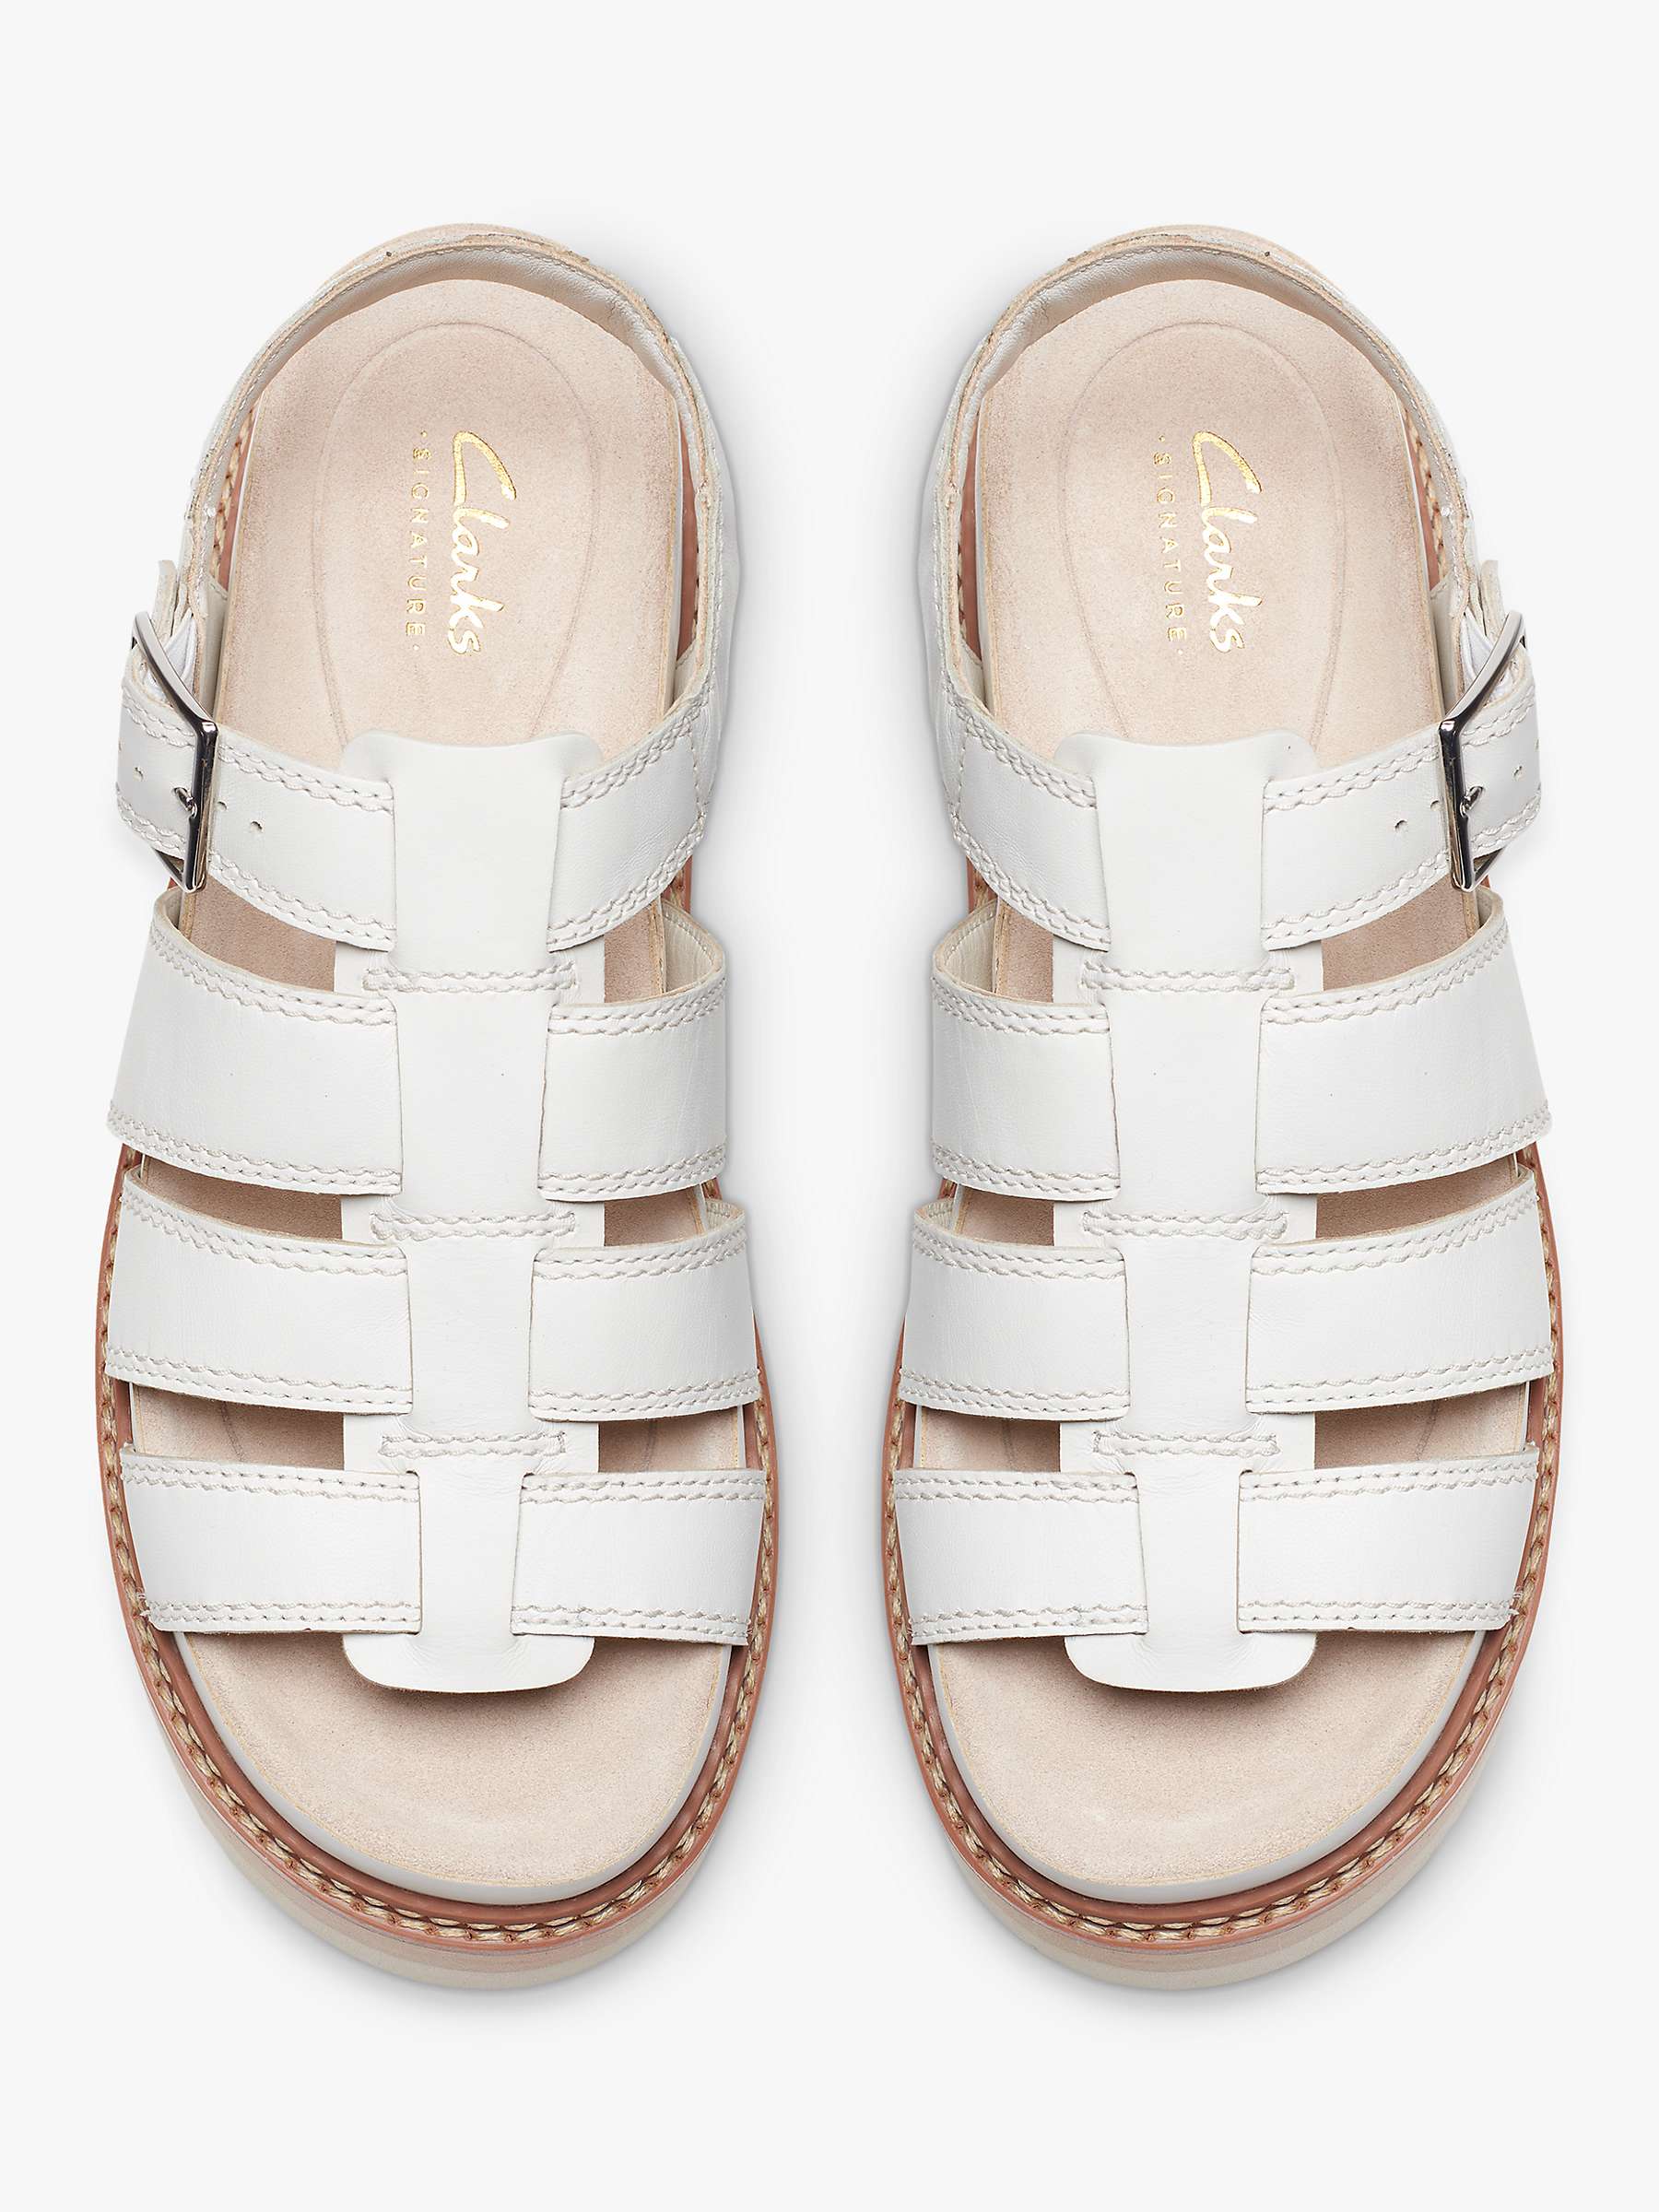 Buy Clarks Orianna Twist Leather Caged Sandals Online at johnlewis.com